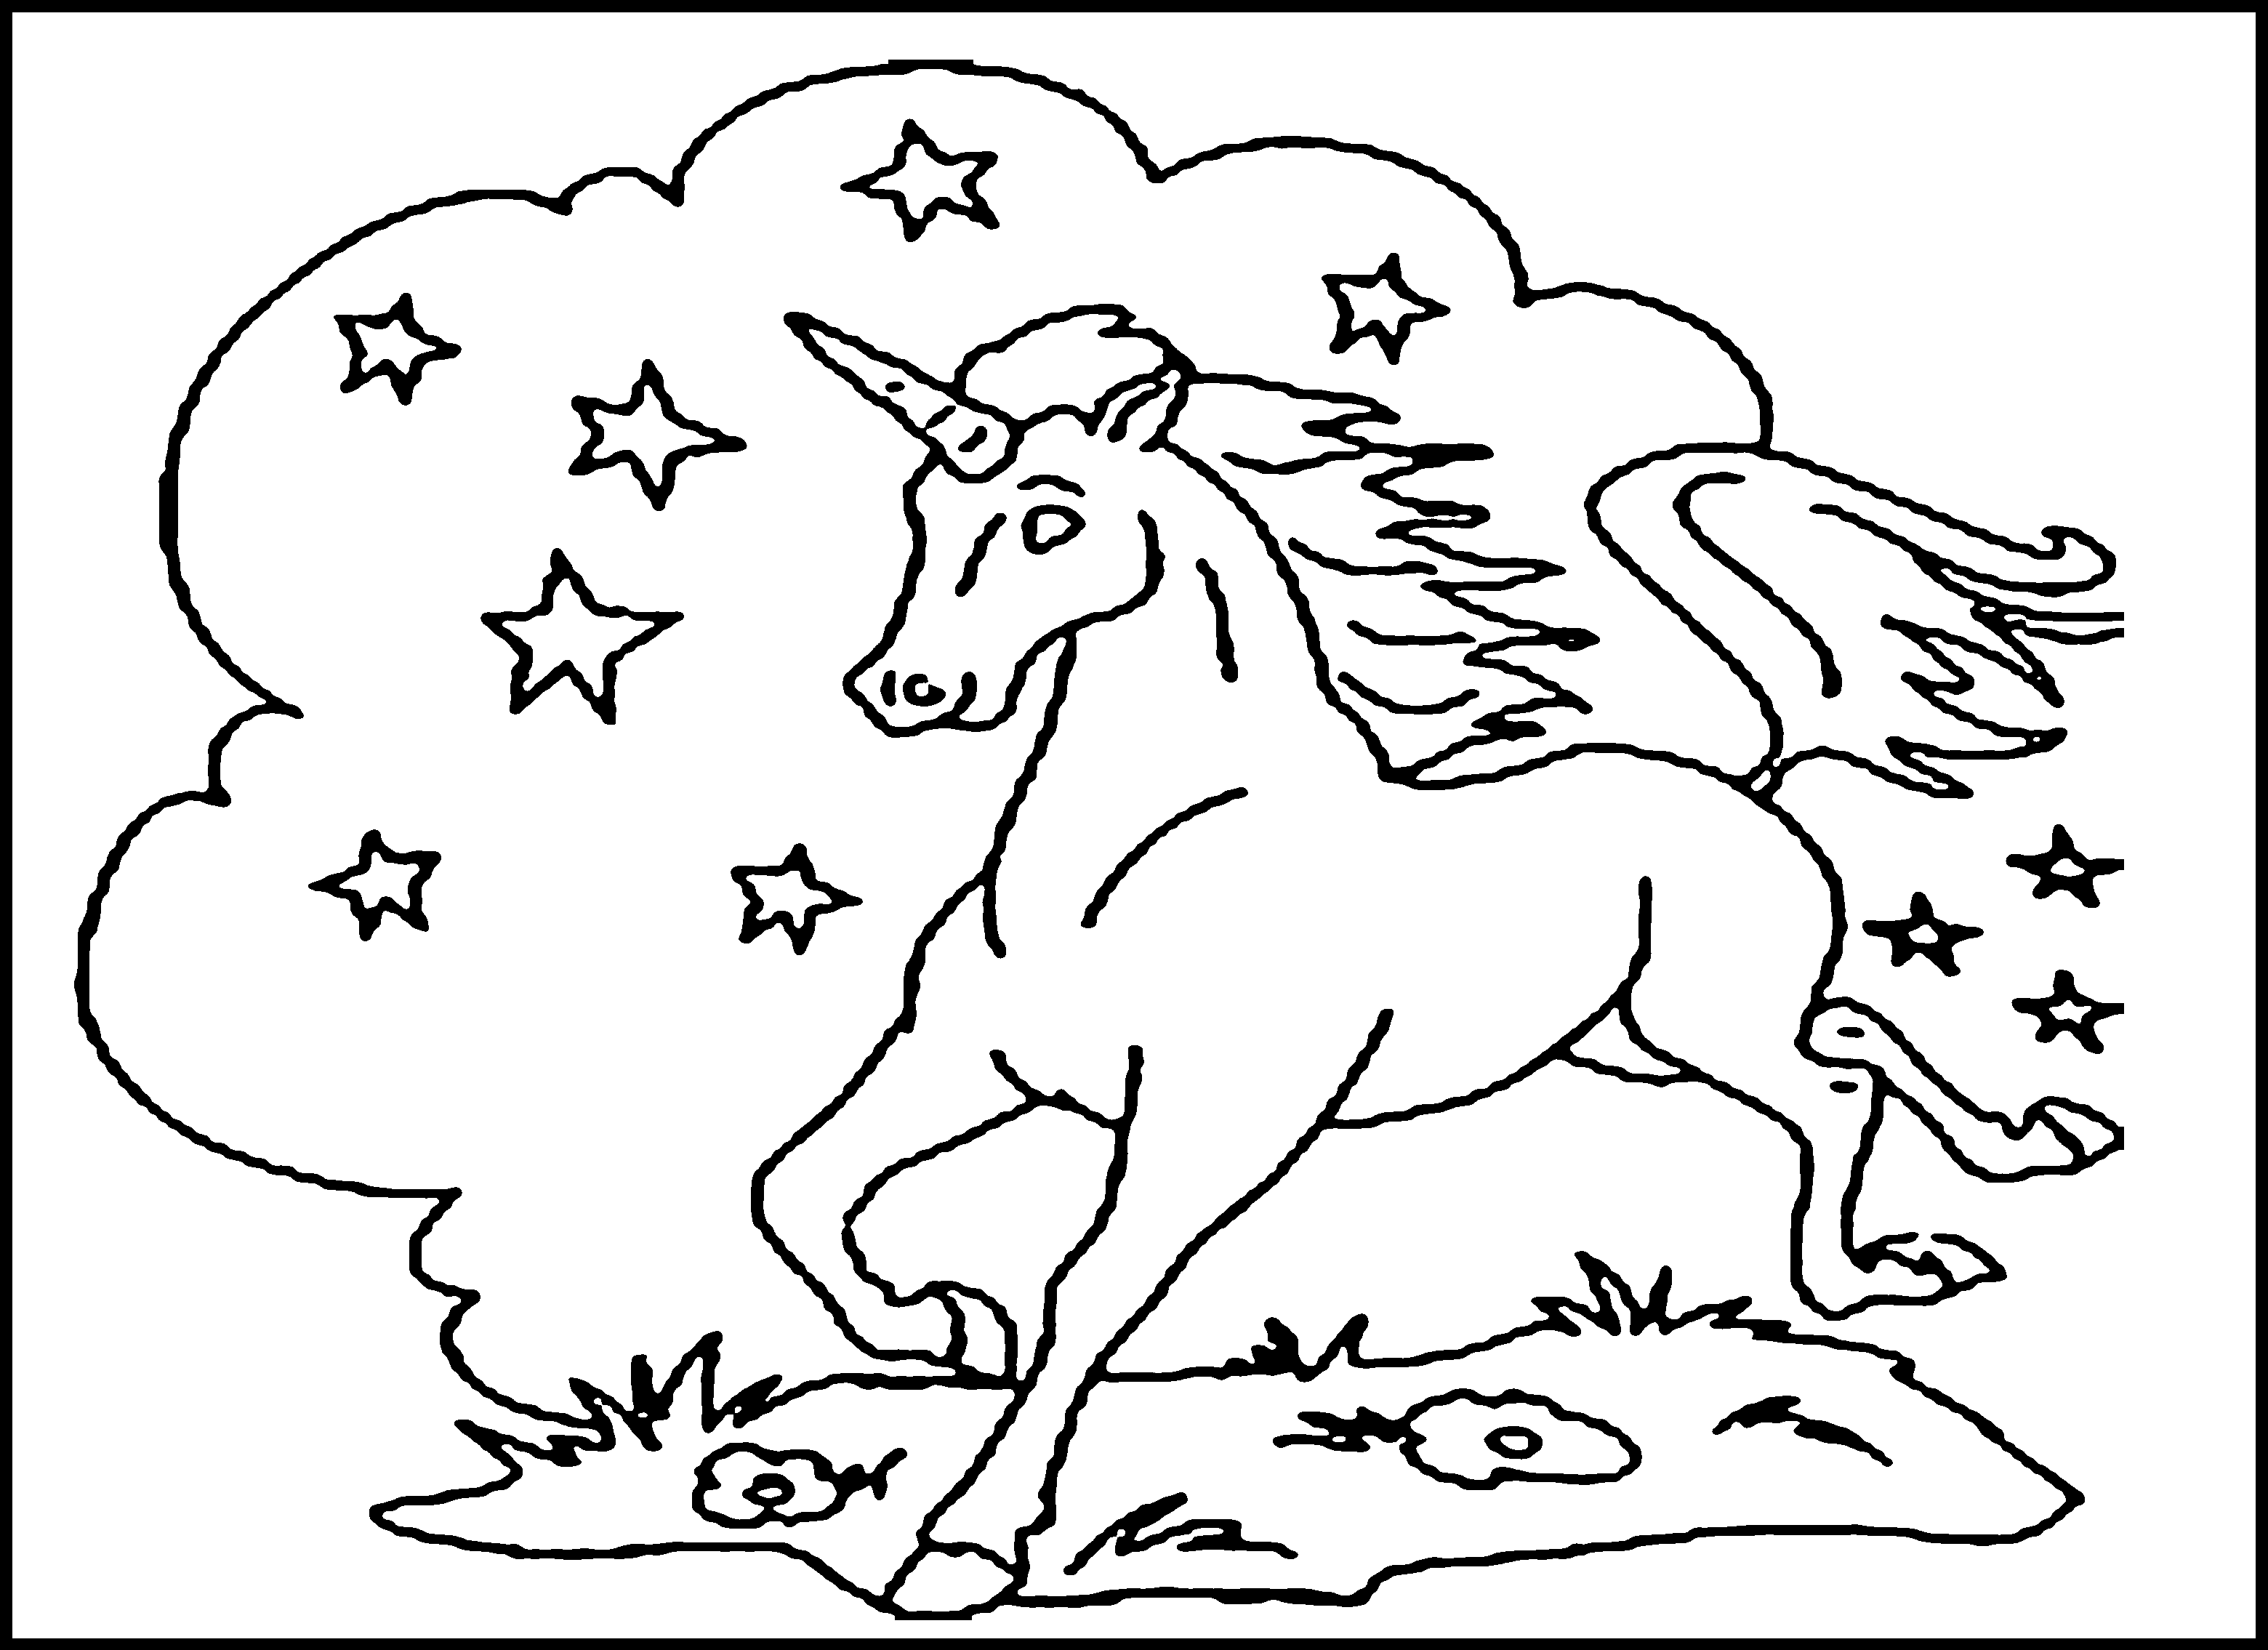 unicorn coloring page printable free